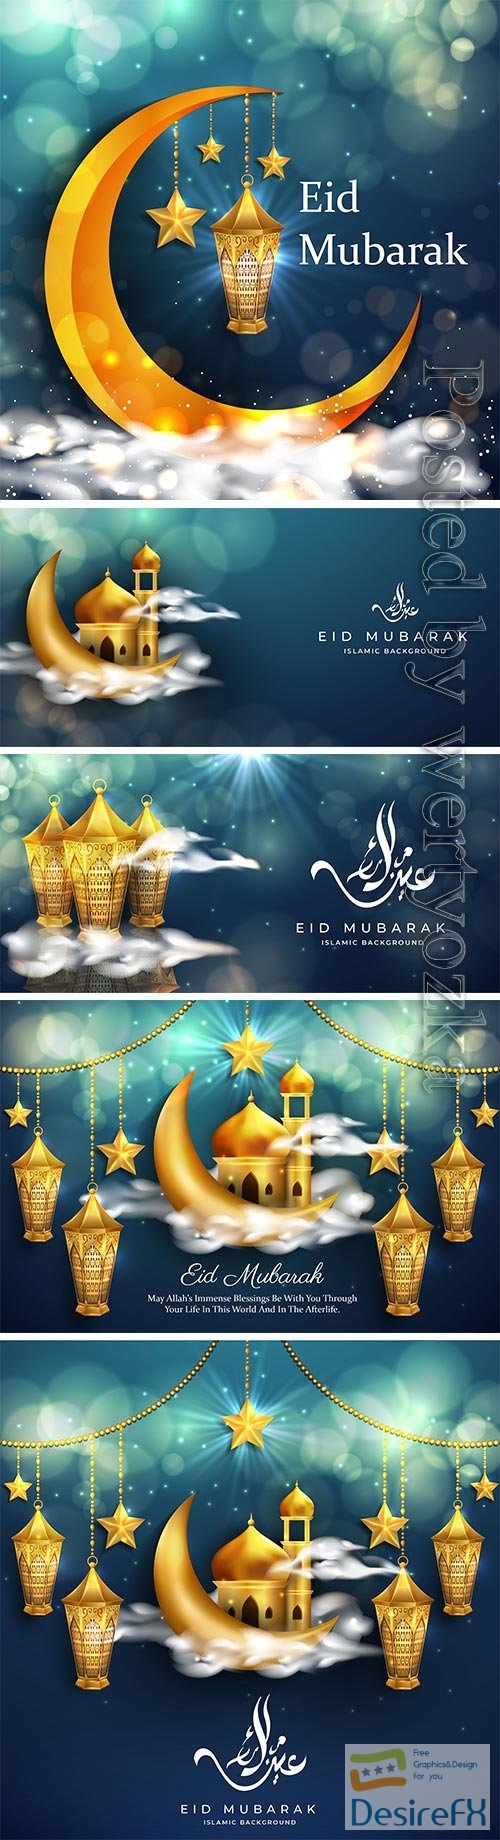 Eid mubarak background with realistic golden lanterns